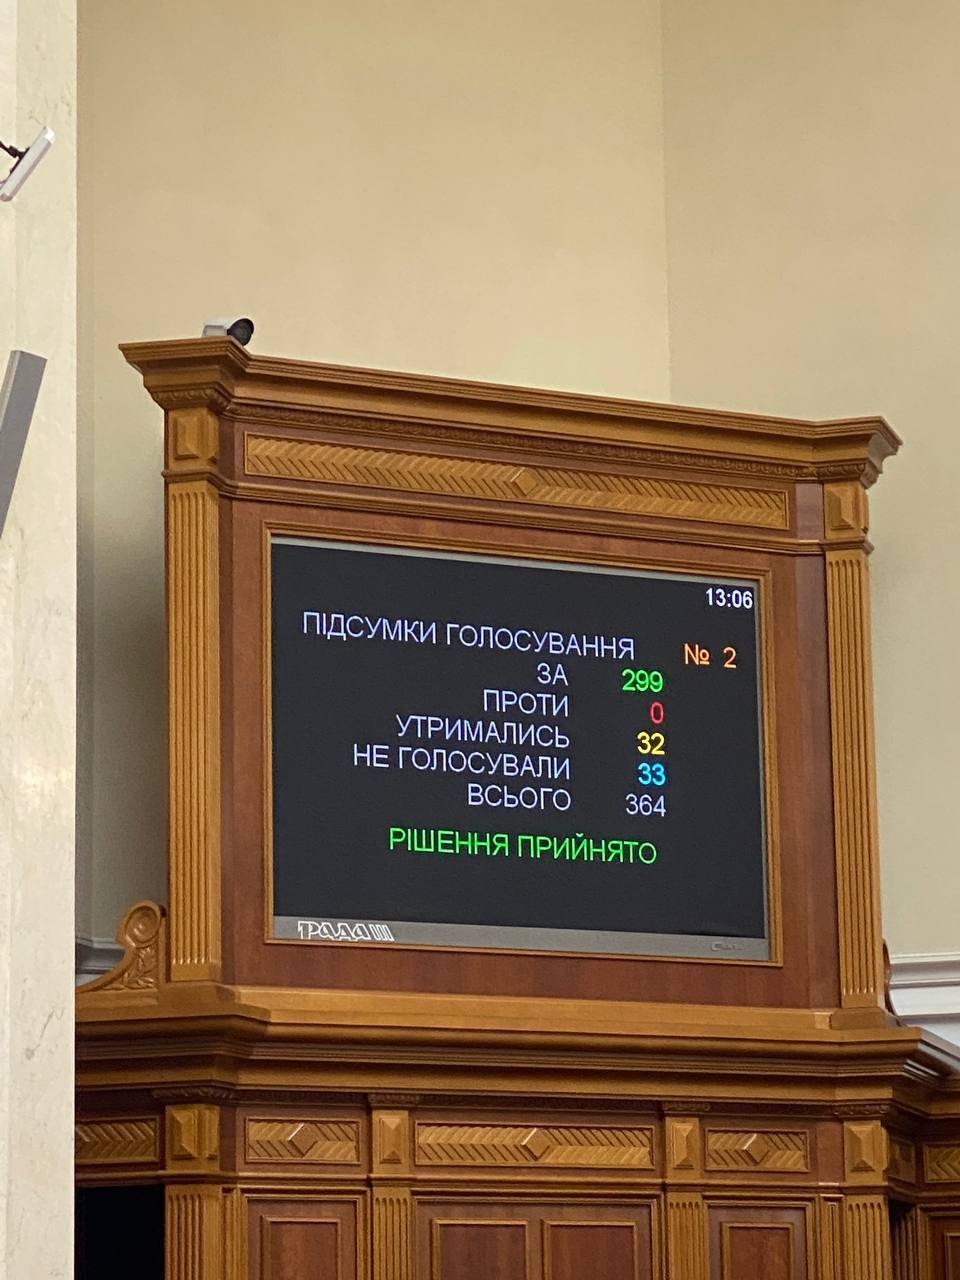 299 нардепов поддержали кандидатуру Костина.